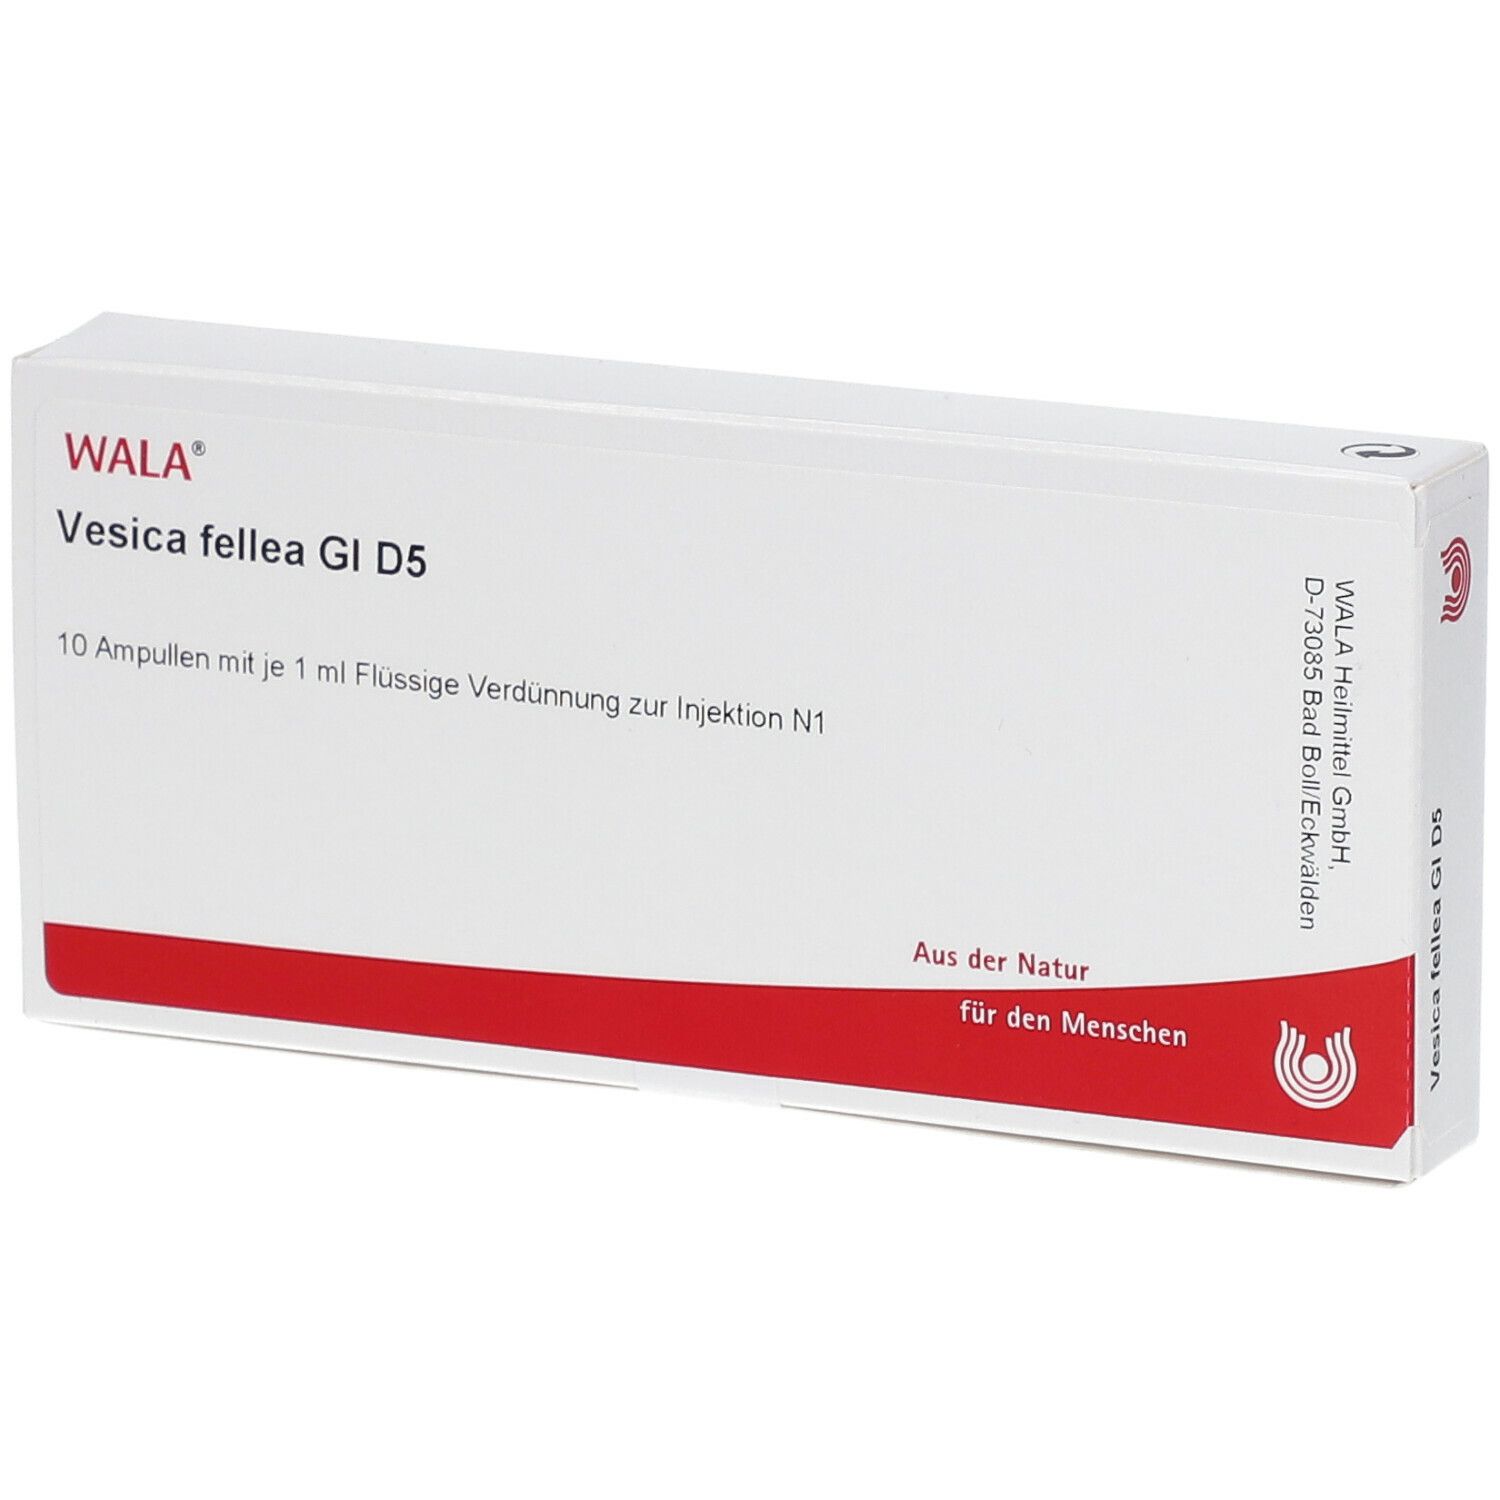 WALA® Vesica fellea Gl D 5